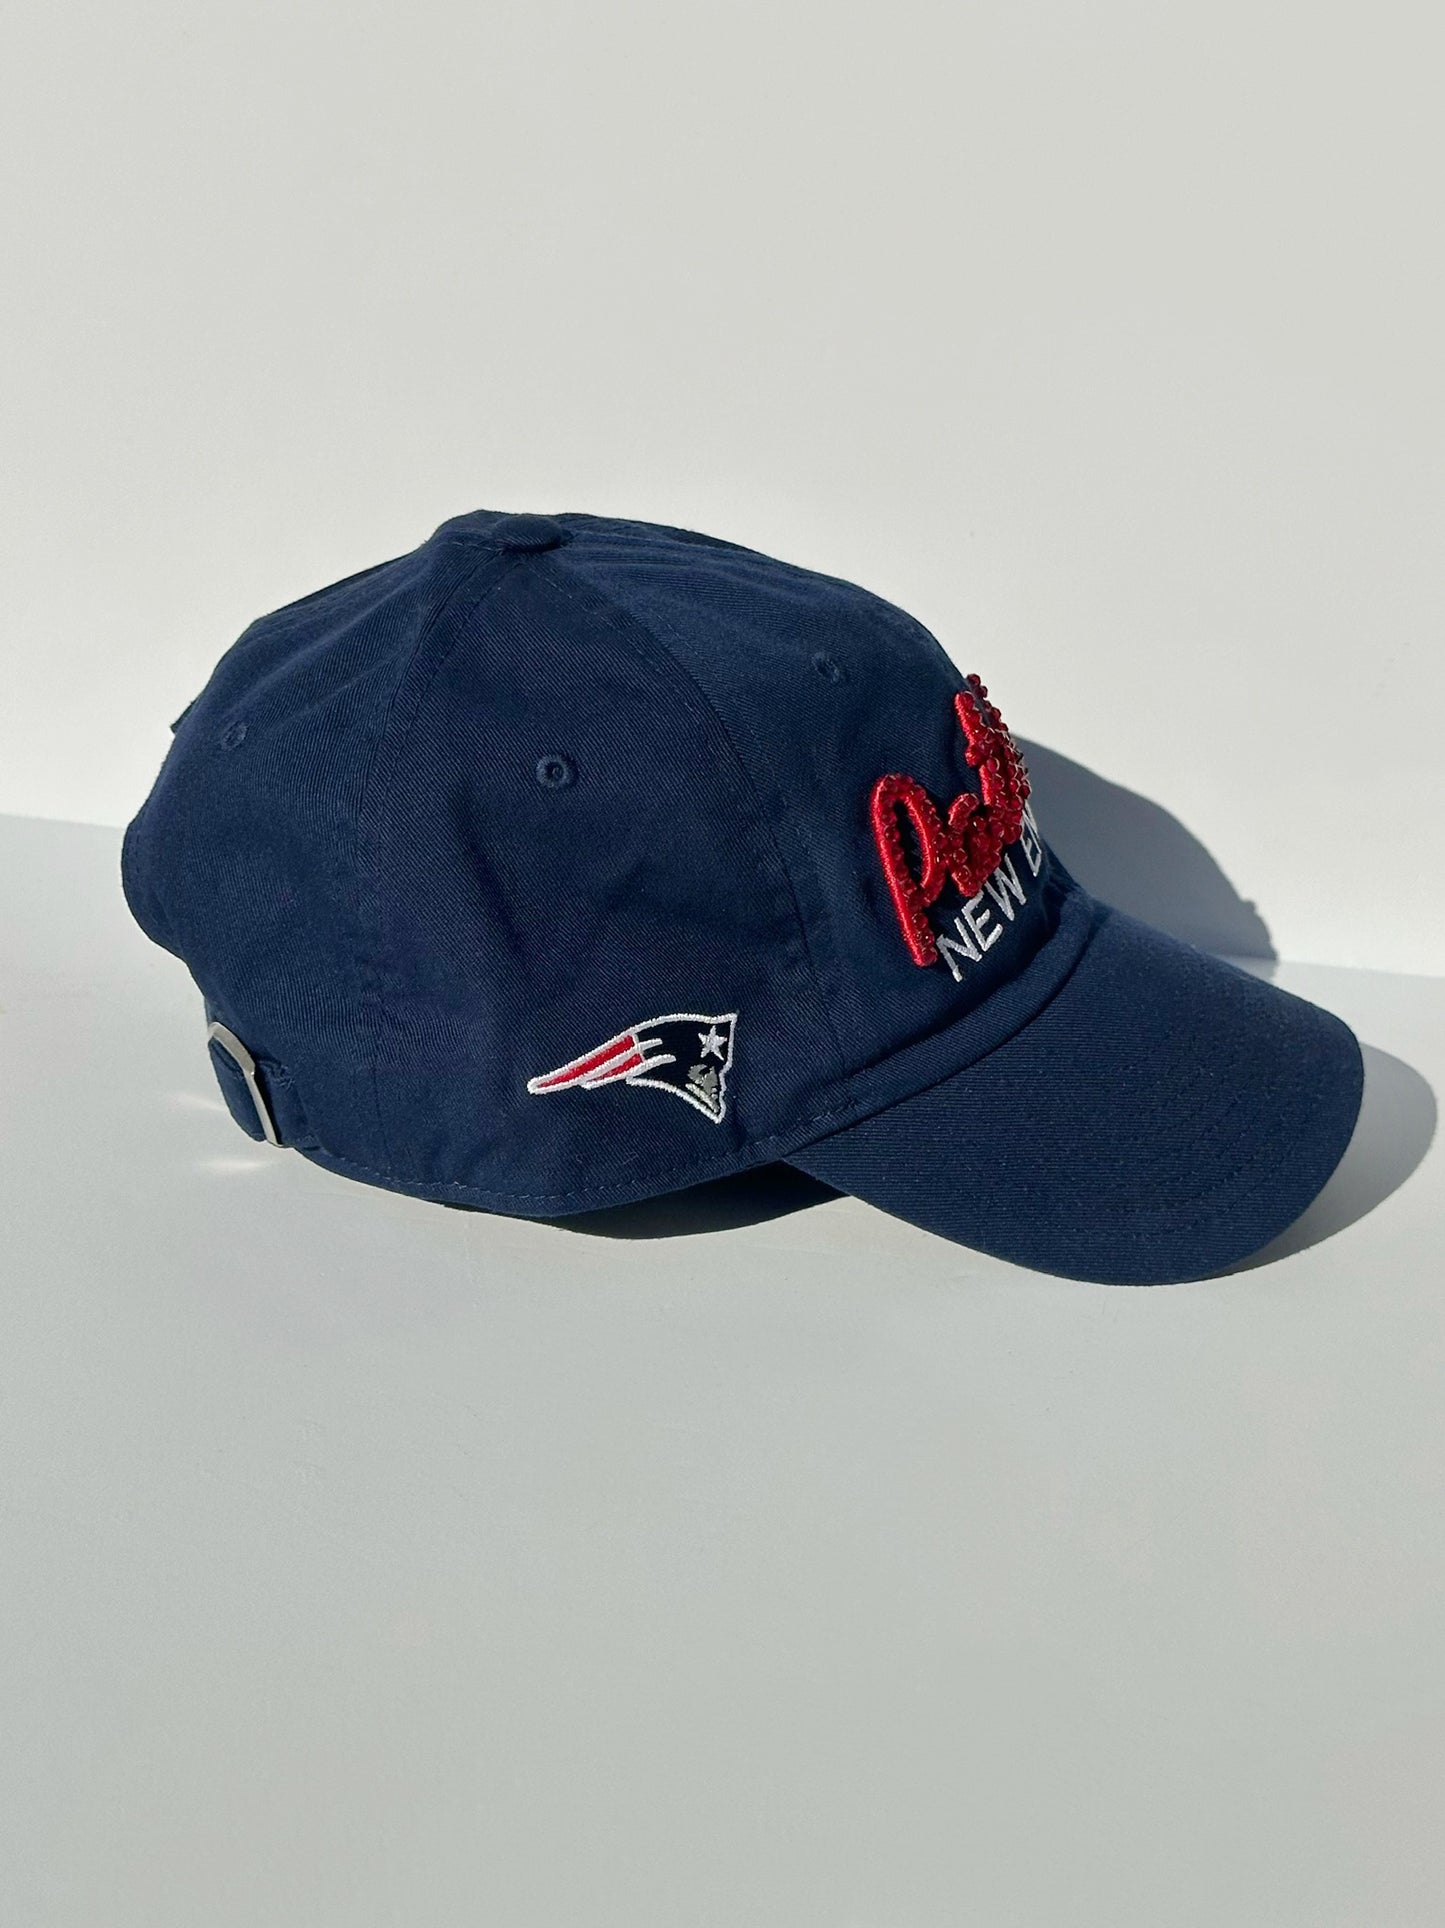 New England Patriots Bling Baseball Hat